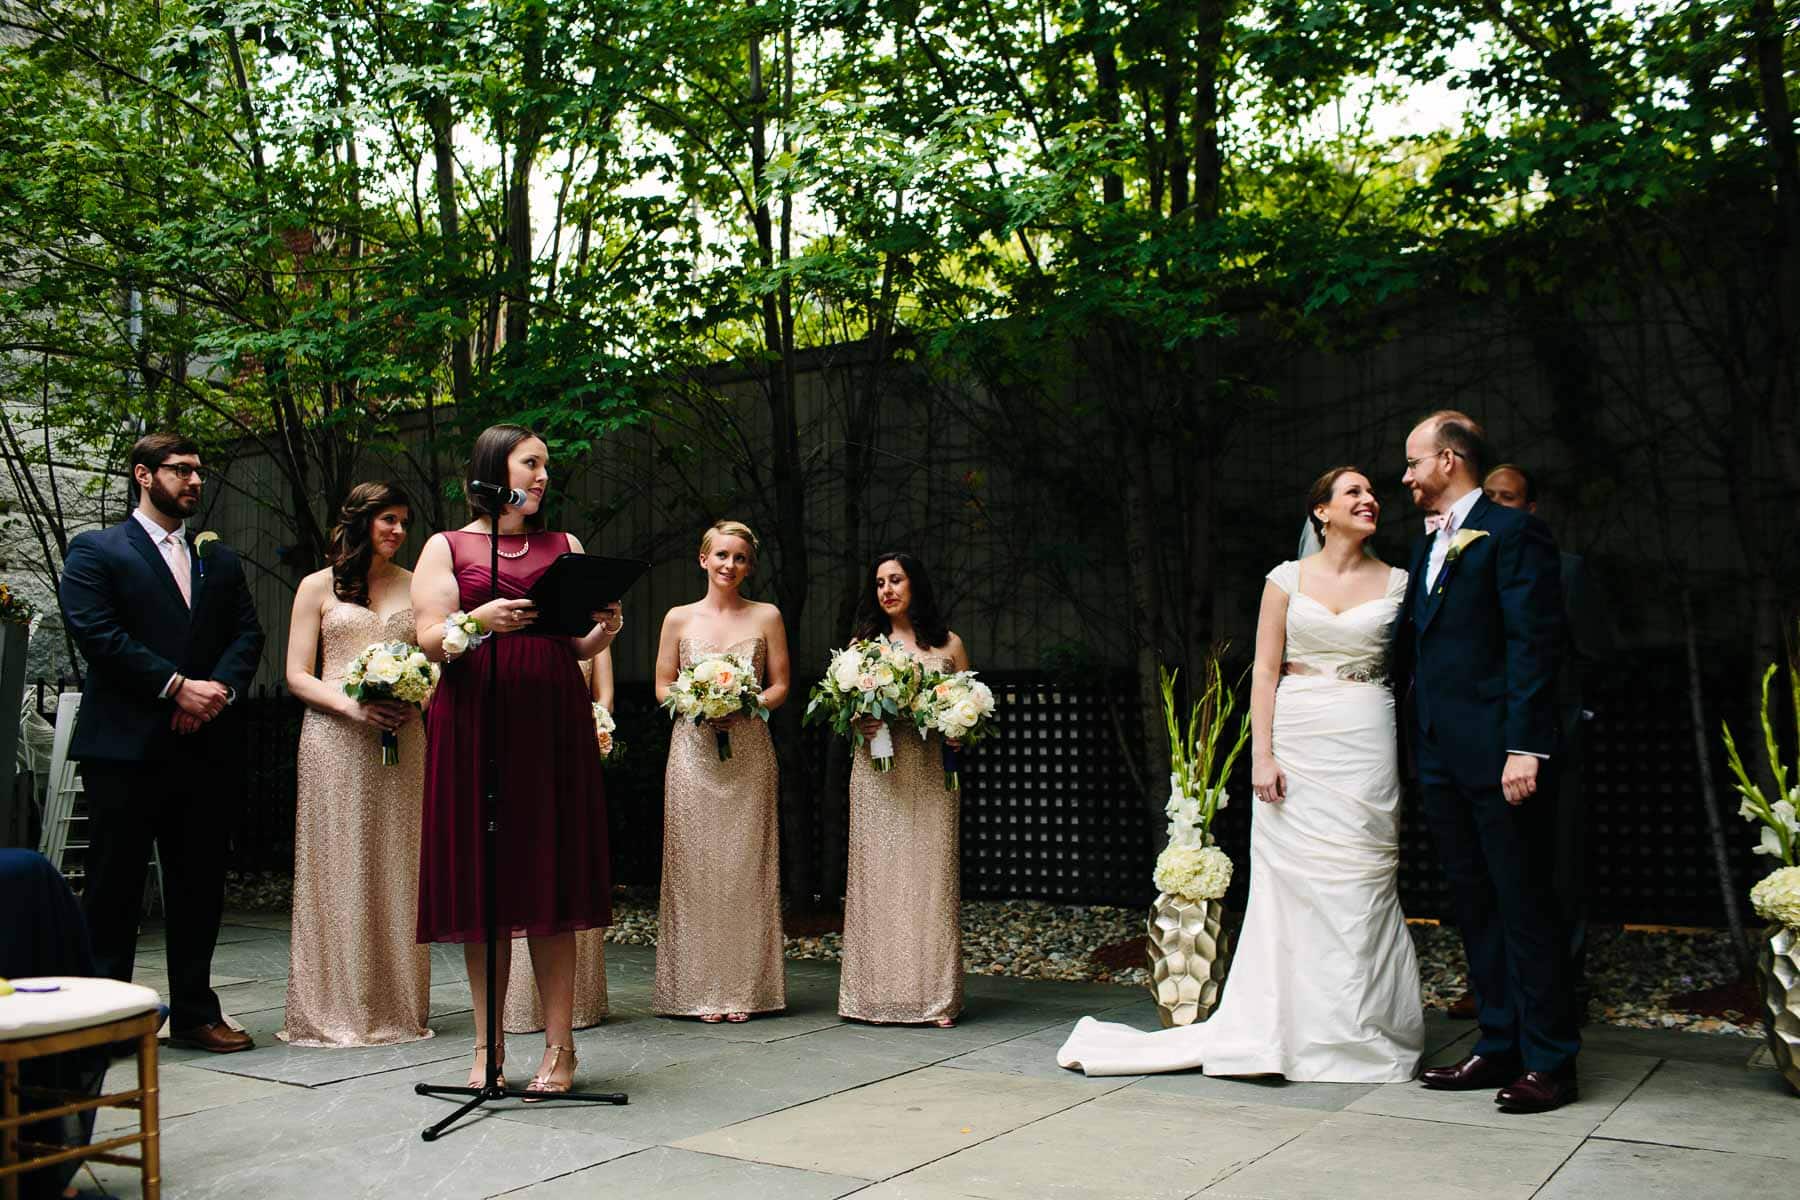 Liberty Hotel wedding of Laura and Tom in Boston, MA | Kelly Benvenuto Photography | Boston Wedding Photographer